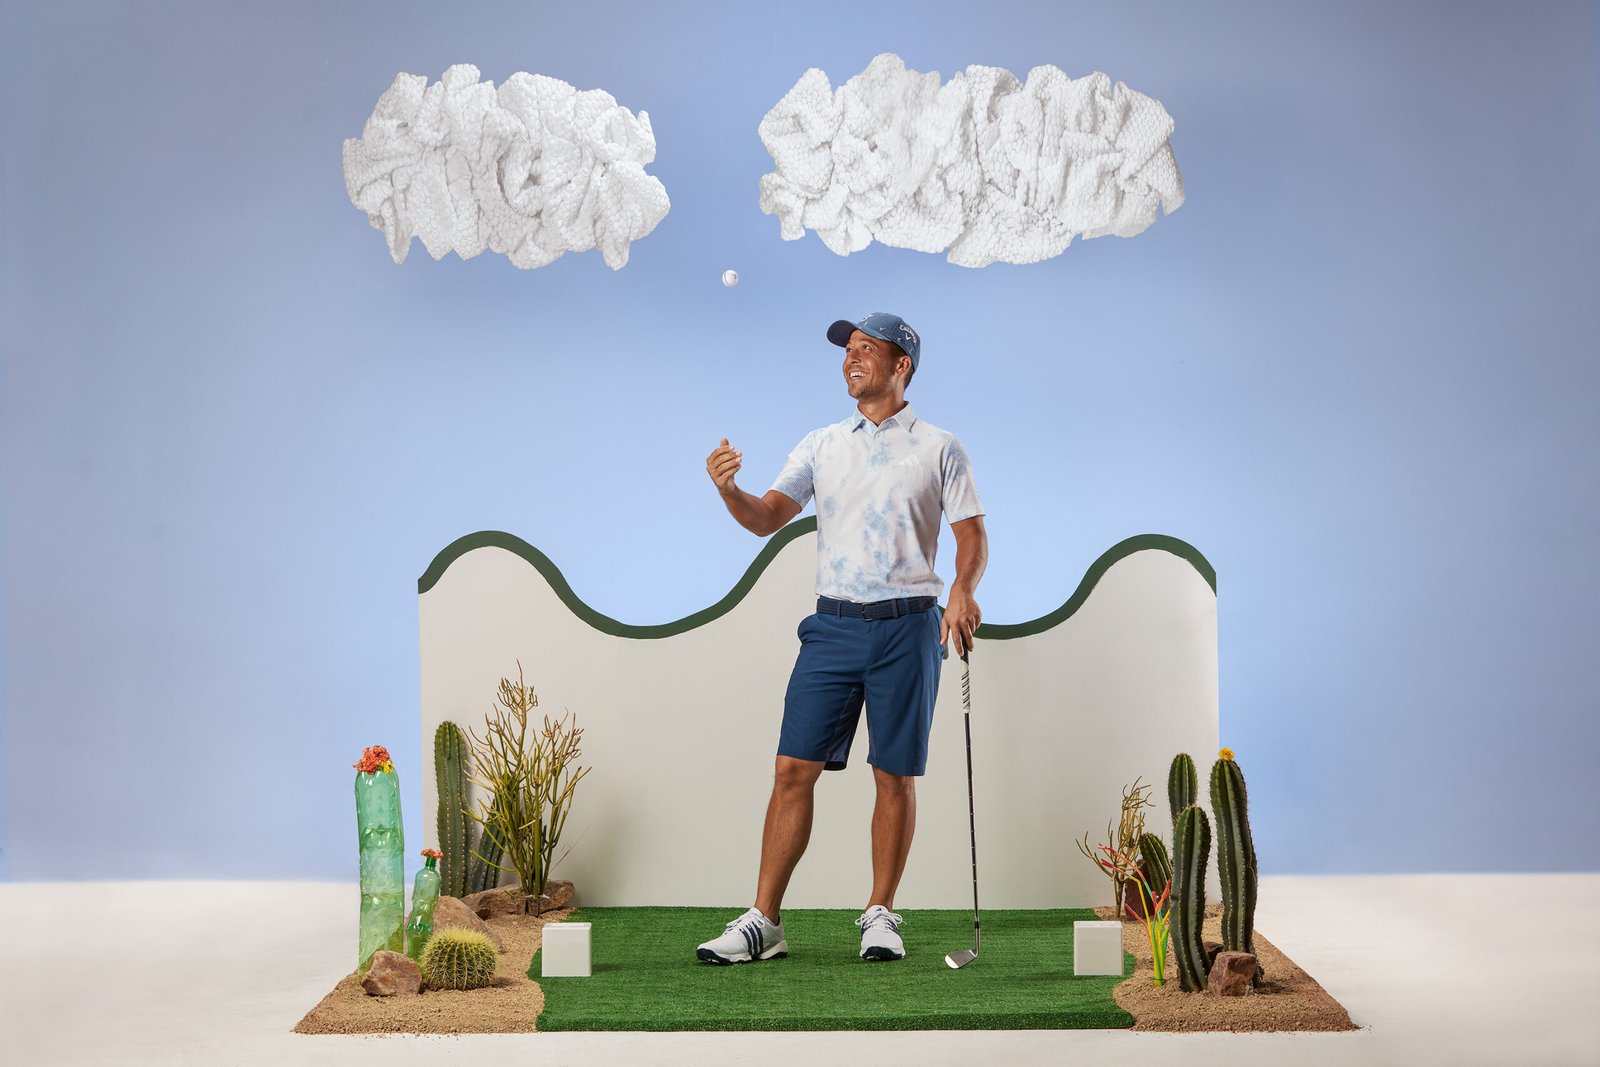 Inspiring Golfers to Play Green